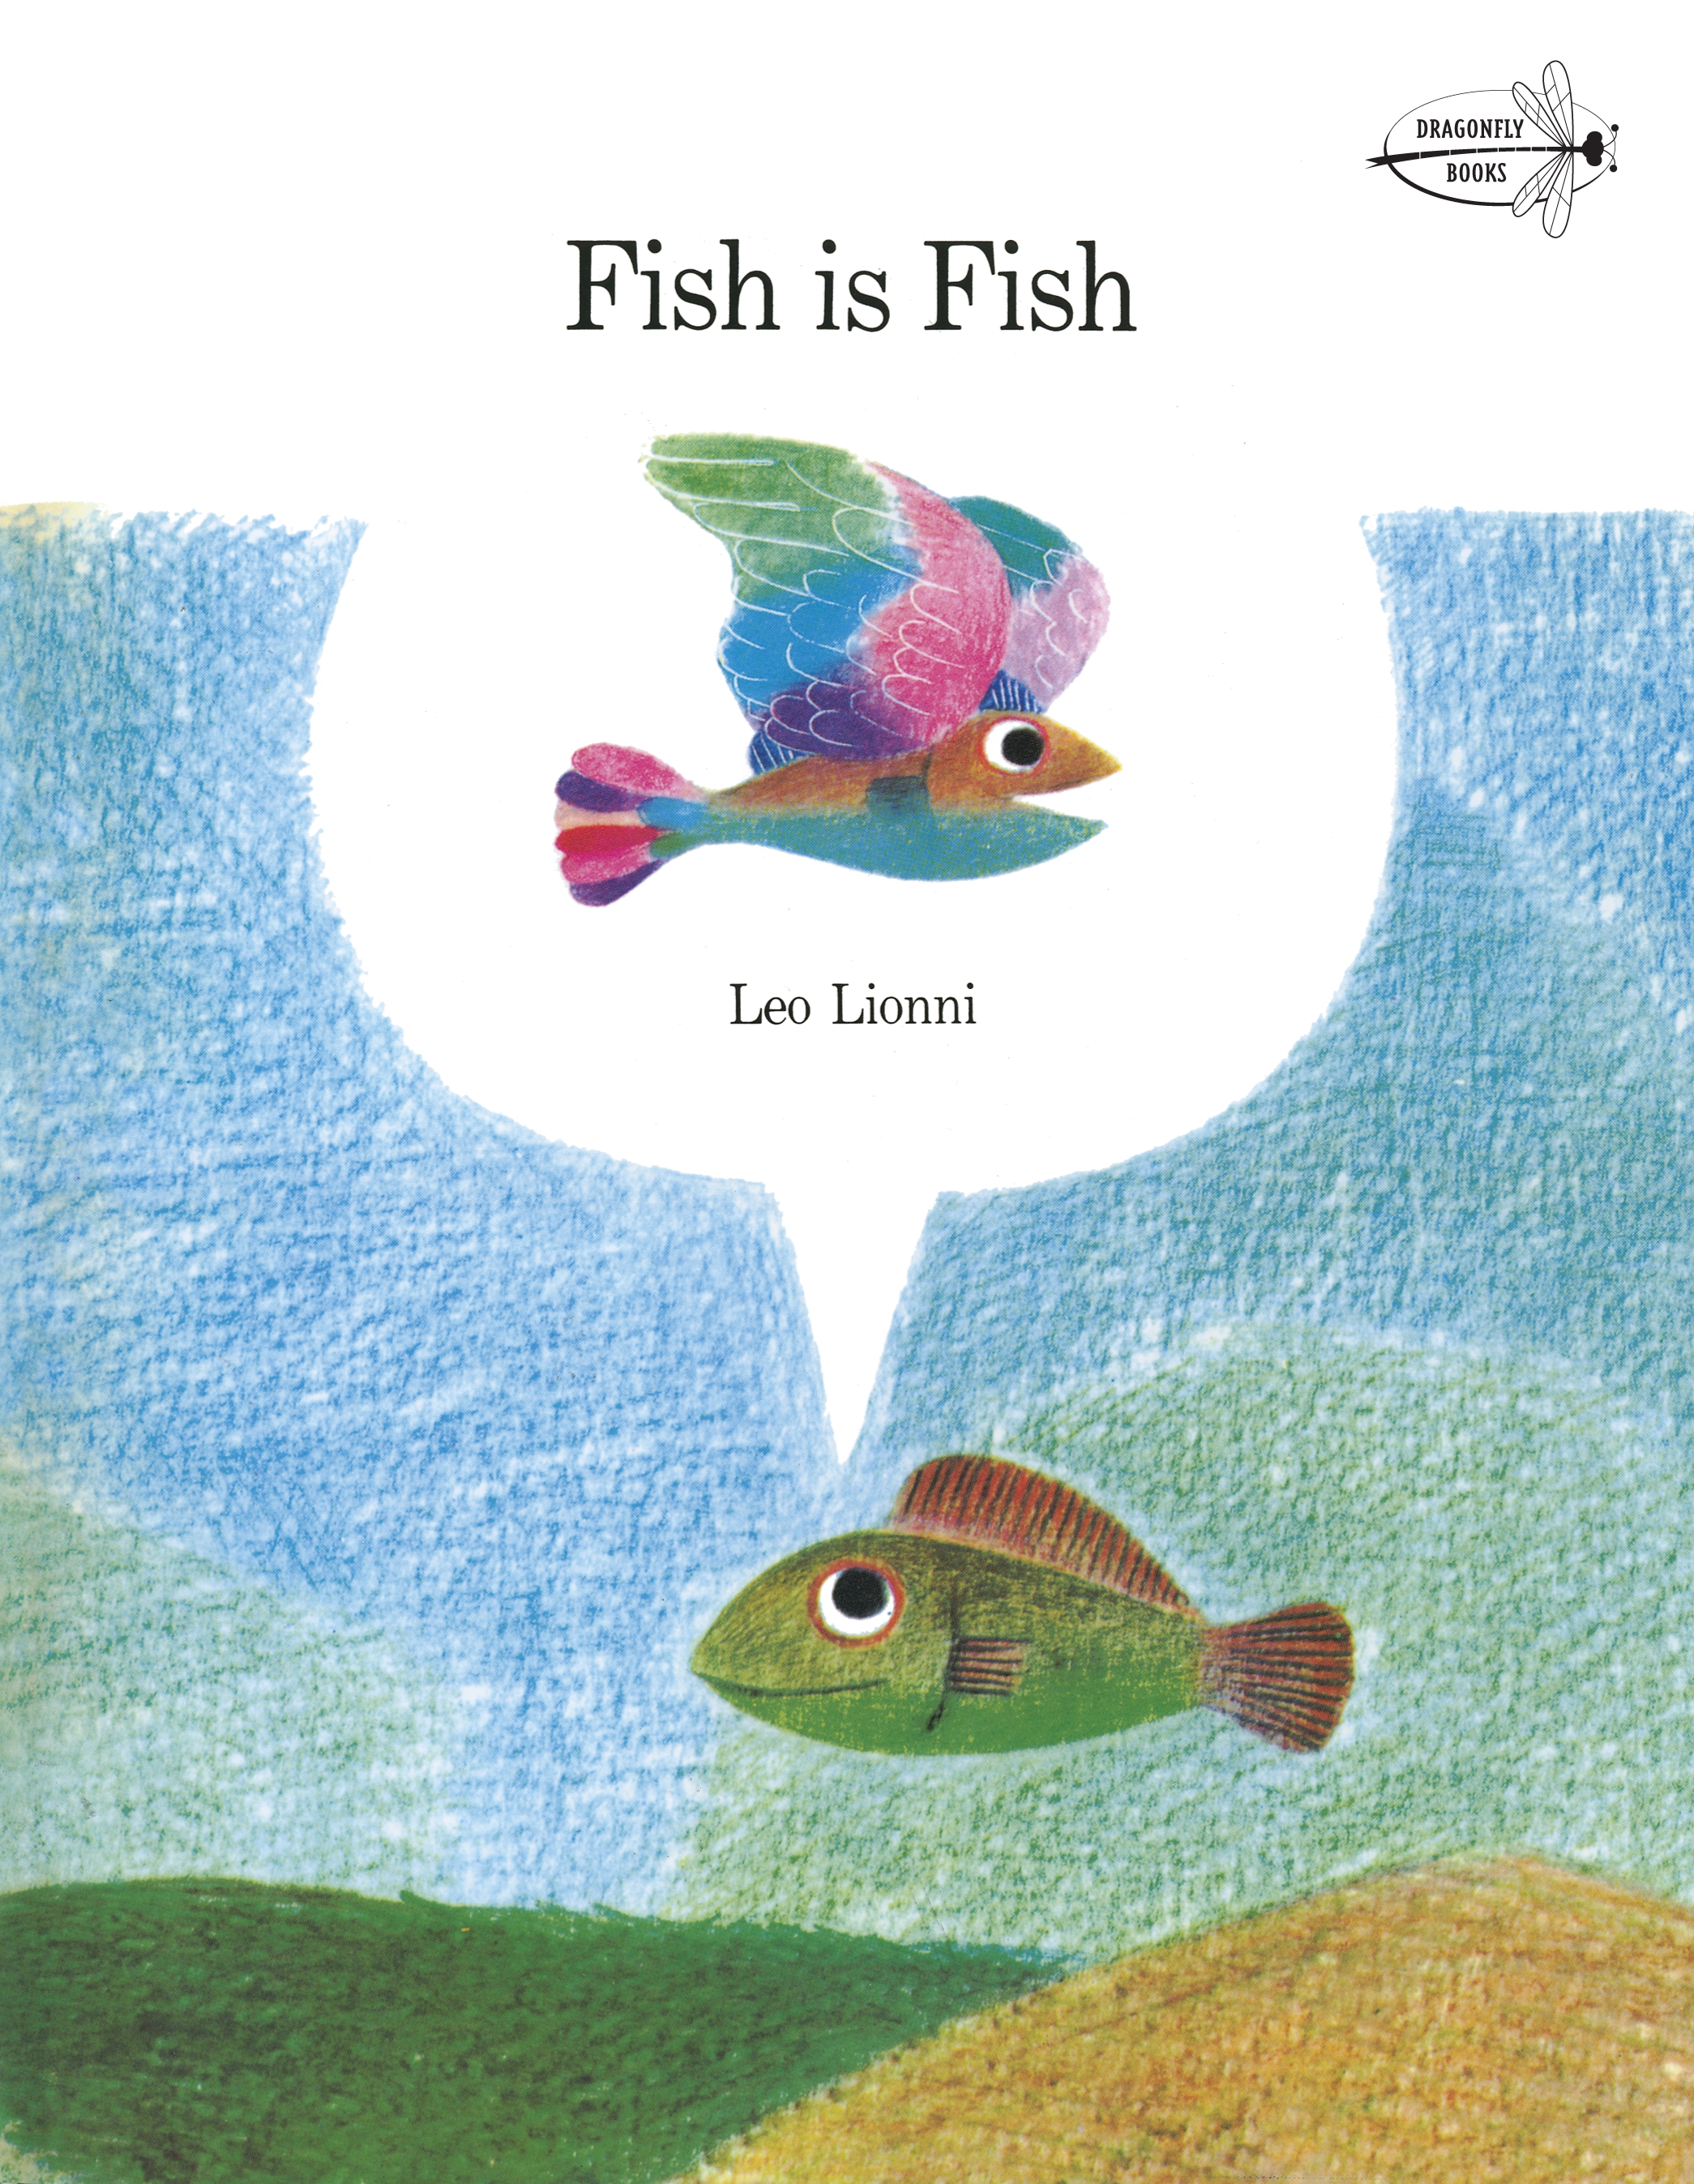 Fish is Fish by Leo Lionni - Penguin Books Australia